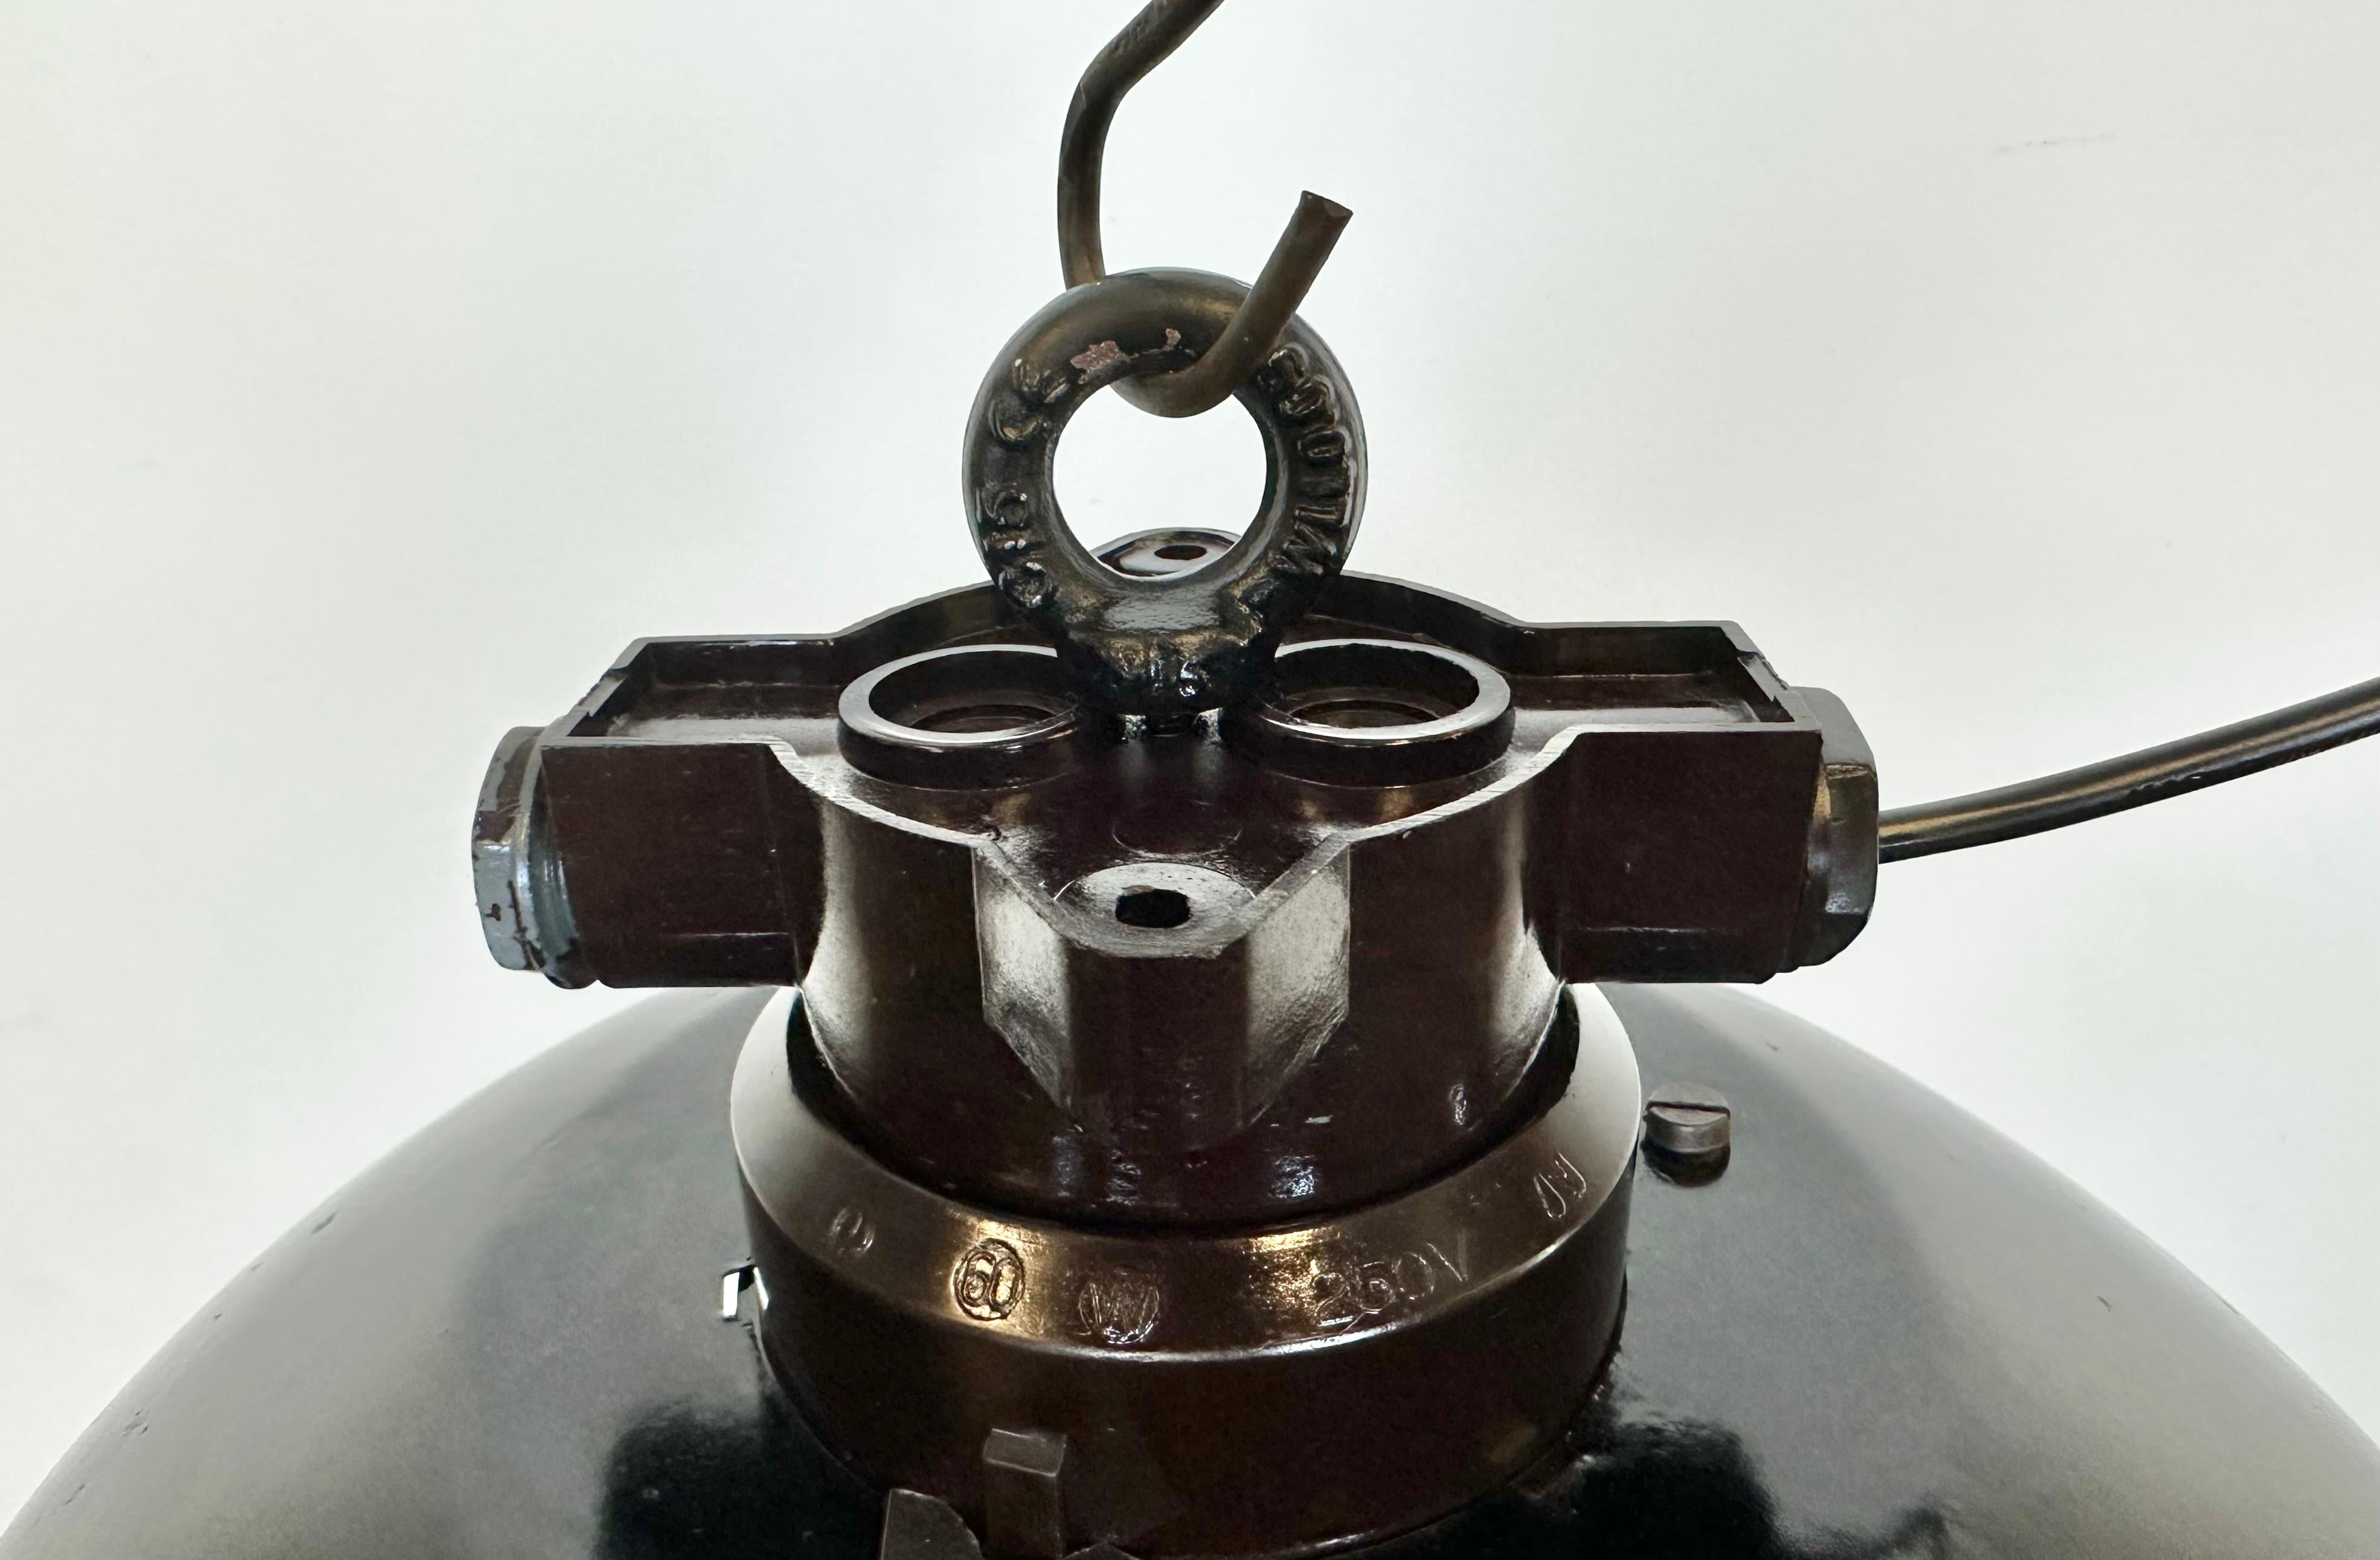 Industrial Black Enamel Factory Pendant Lamp, 1950s For Sale 3